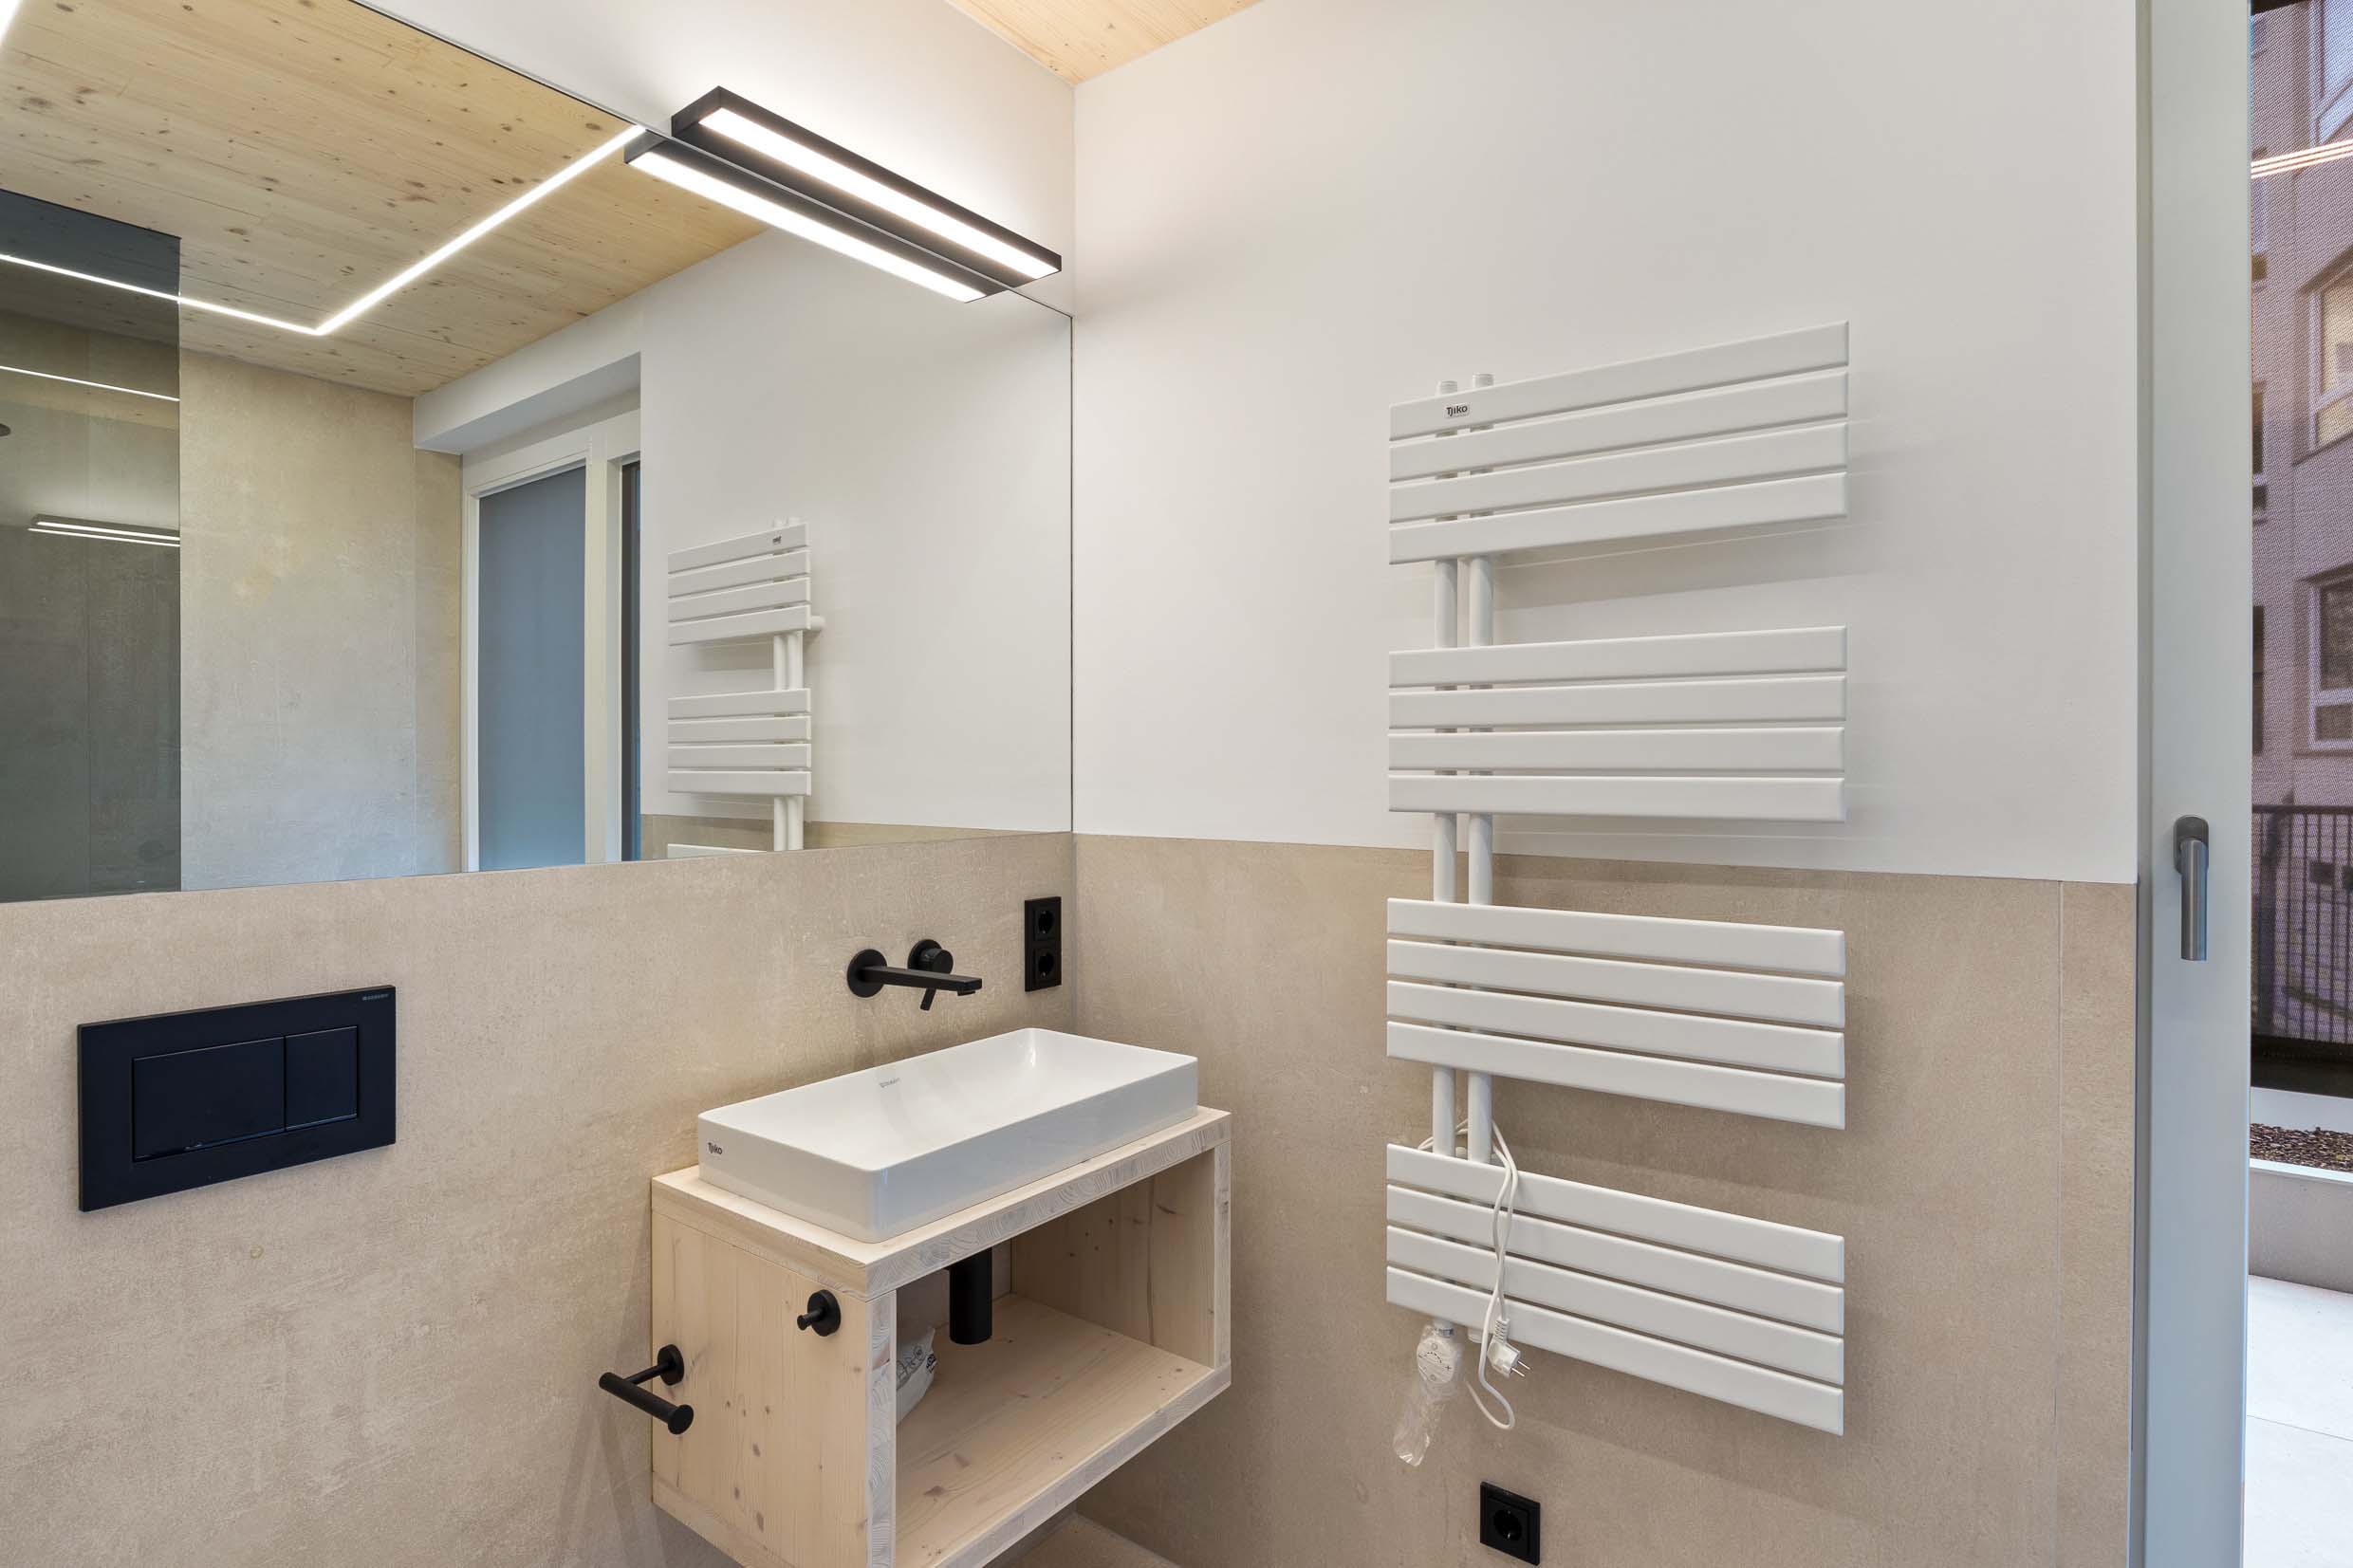 Investment 2 Room Apartment in Berlin Kreuzberg A+ energy efficient